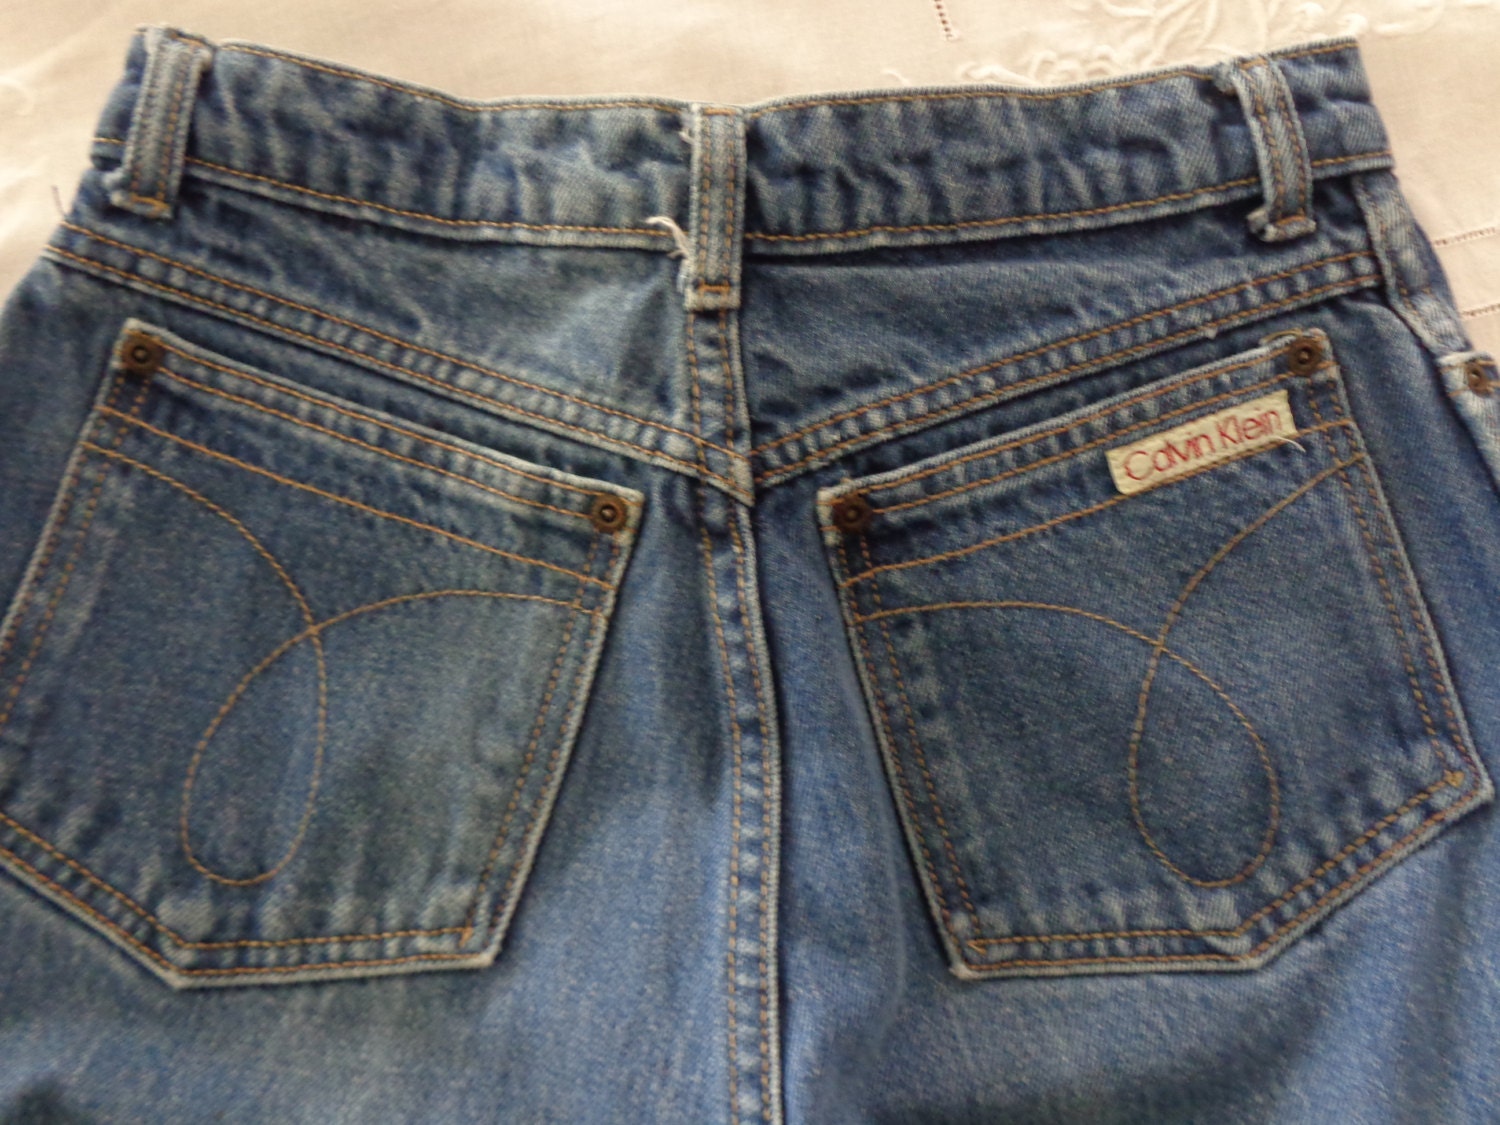 Vintage Calvin Klein Jeans 1970s High Waisted Jeans Vintage